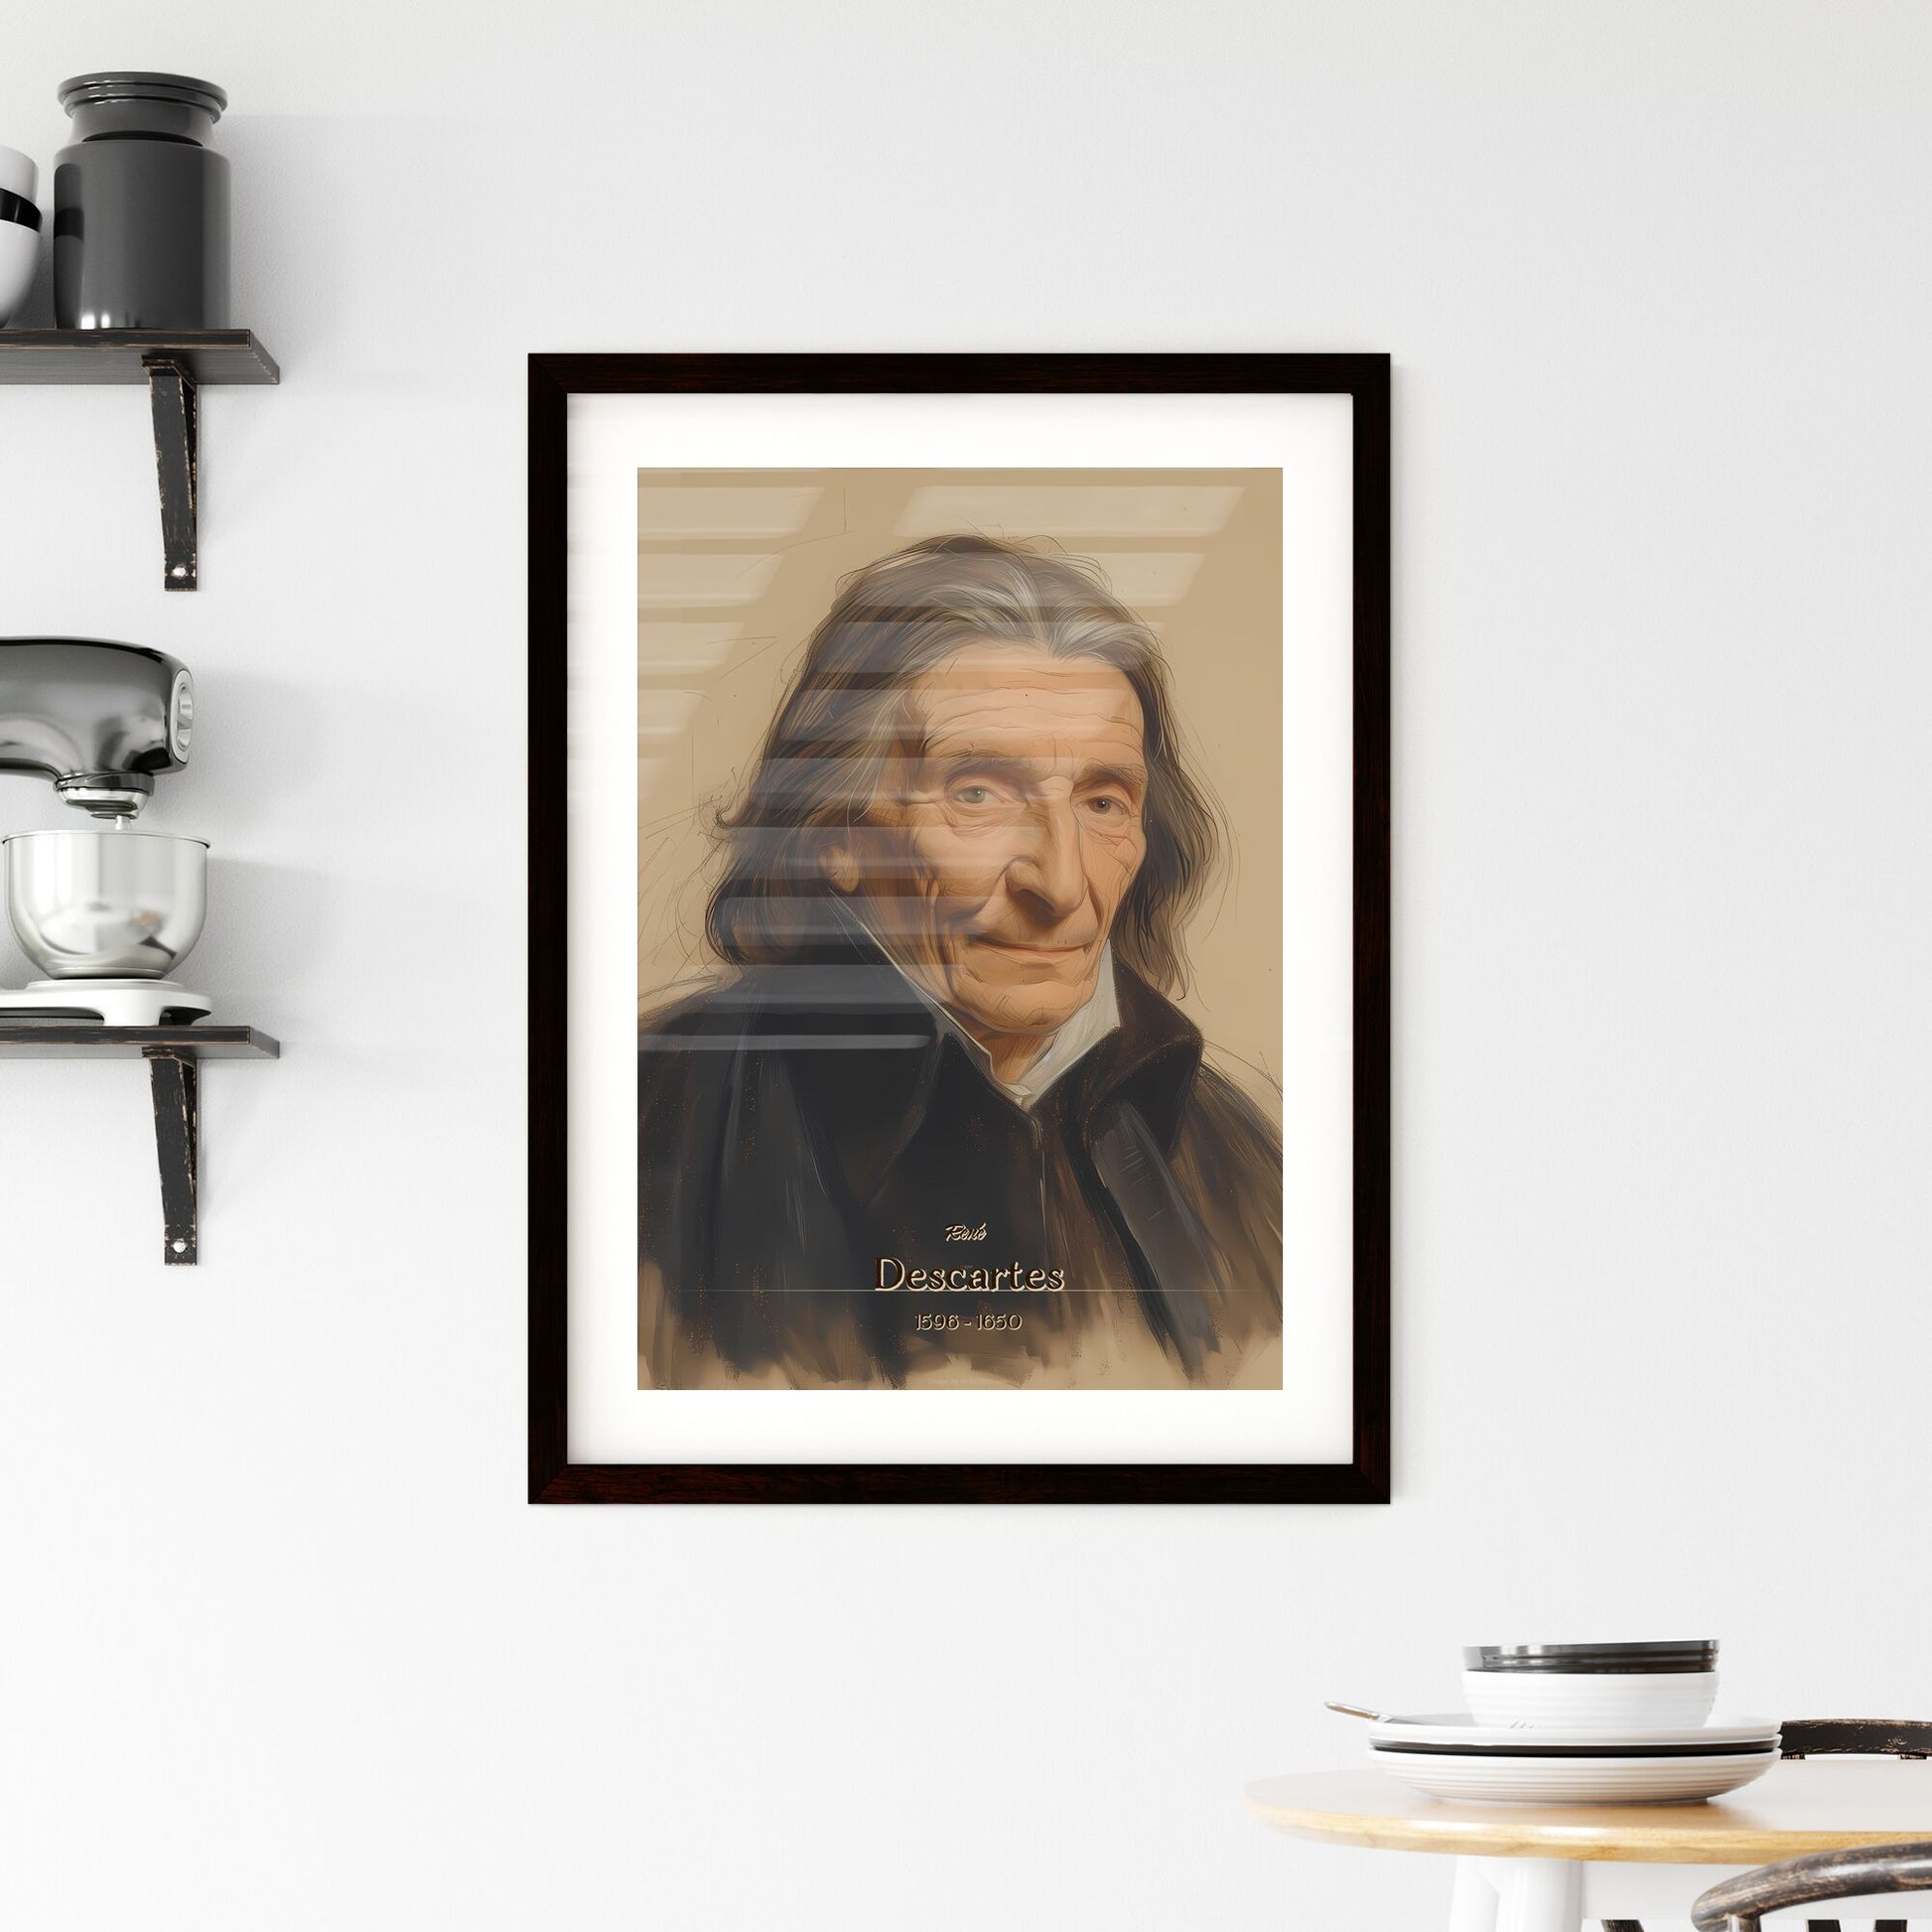 René, Descartes, 1596 - 1650, A Poster of a man with long hair wearing a black coat Default Title